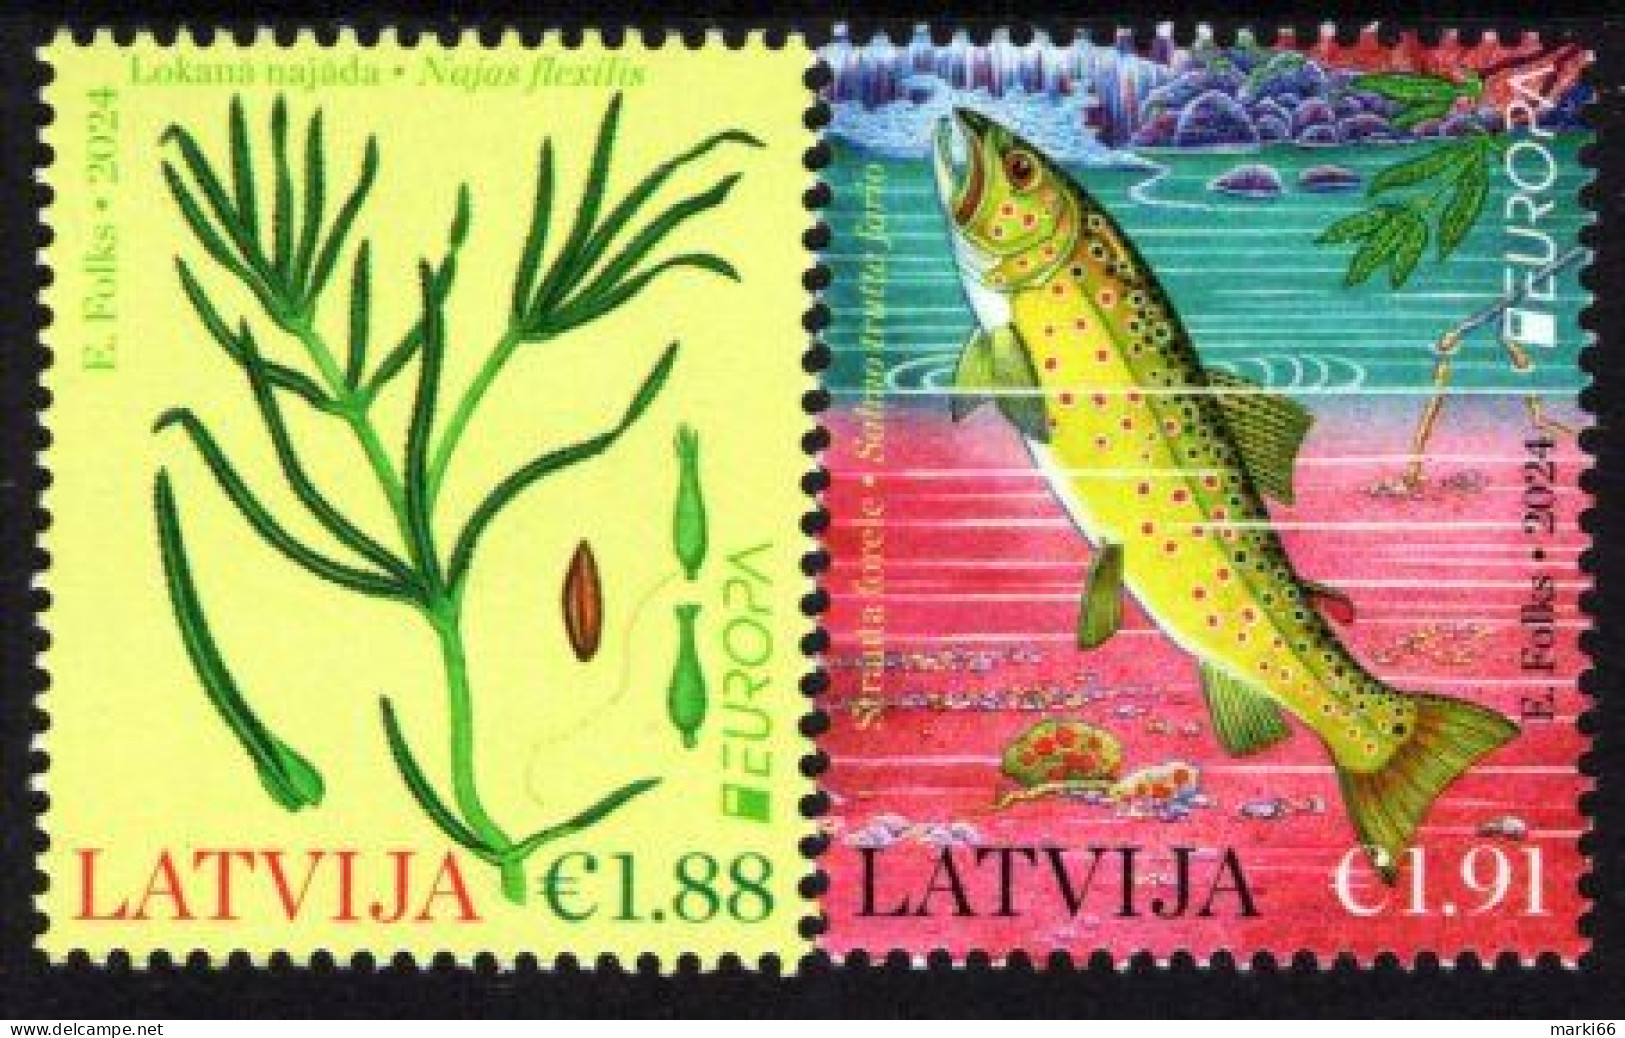 Latvia - 2024 - Europa CEPT - Underwater Flora And Fauna - Mint Stamp Set - Latvia